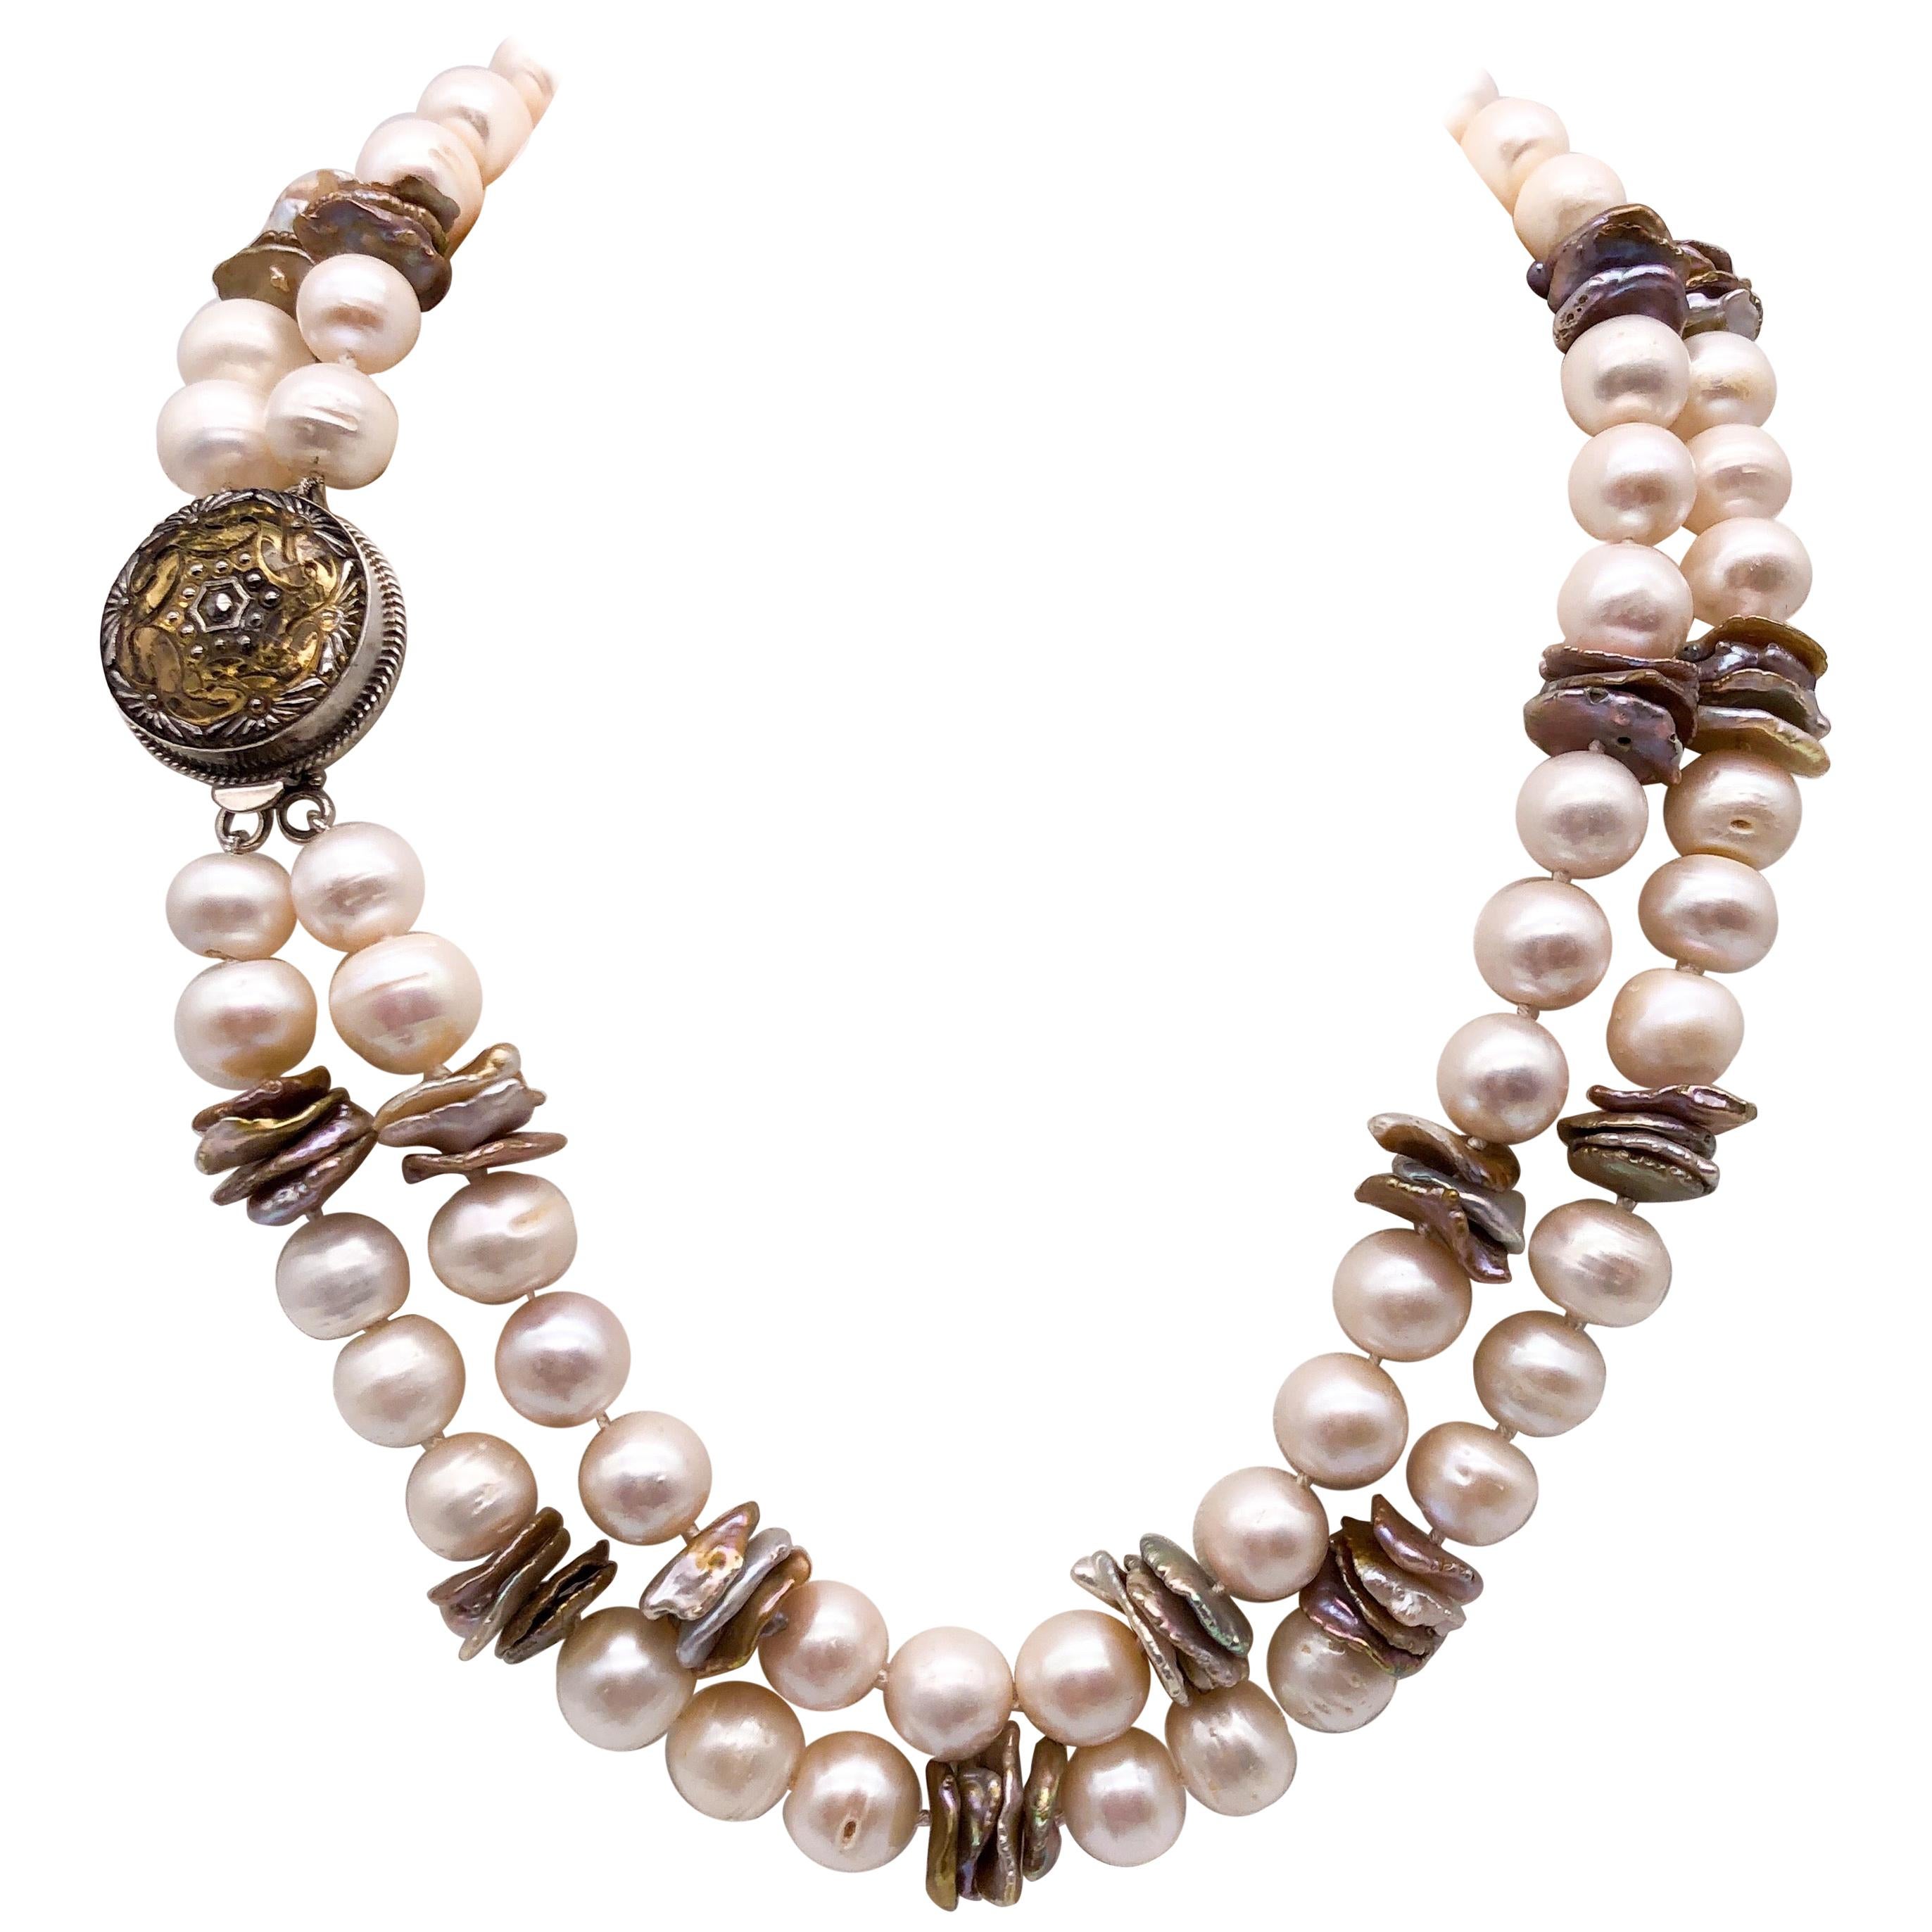 A.Jeschel 2 strand 14 m.m. Pearl necklace.